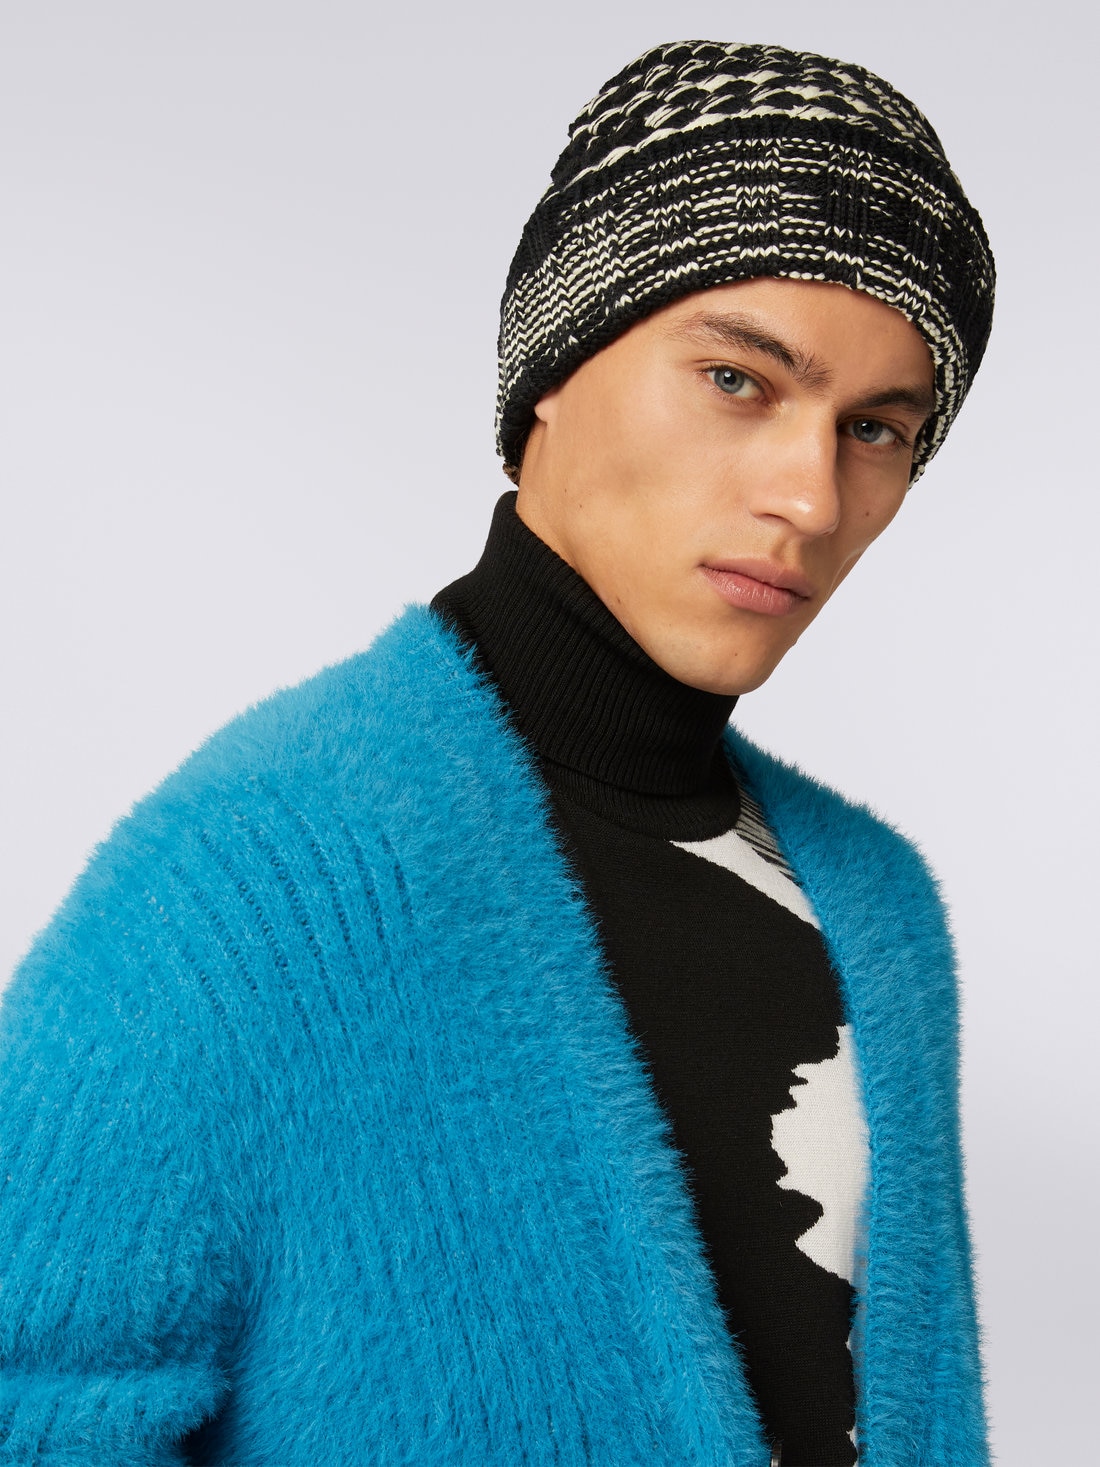 Wool knit hat  , Multicoloured  - 8053147023137 - 2